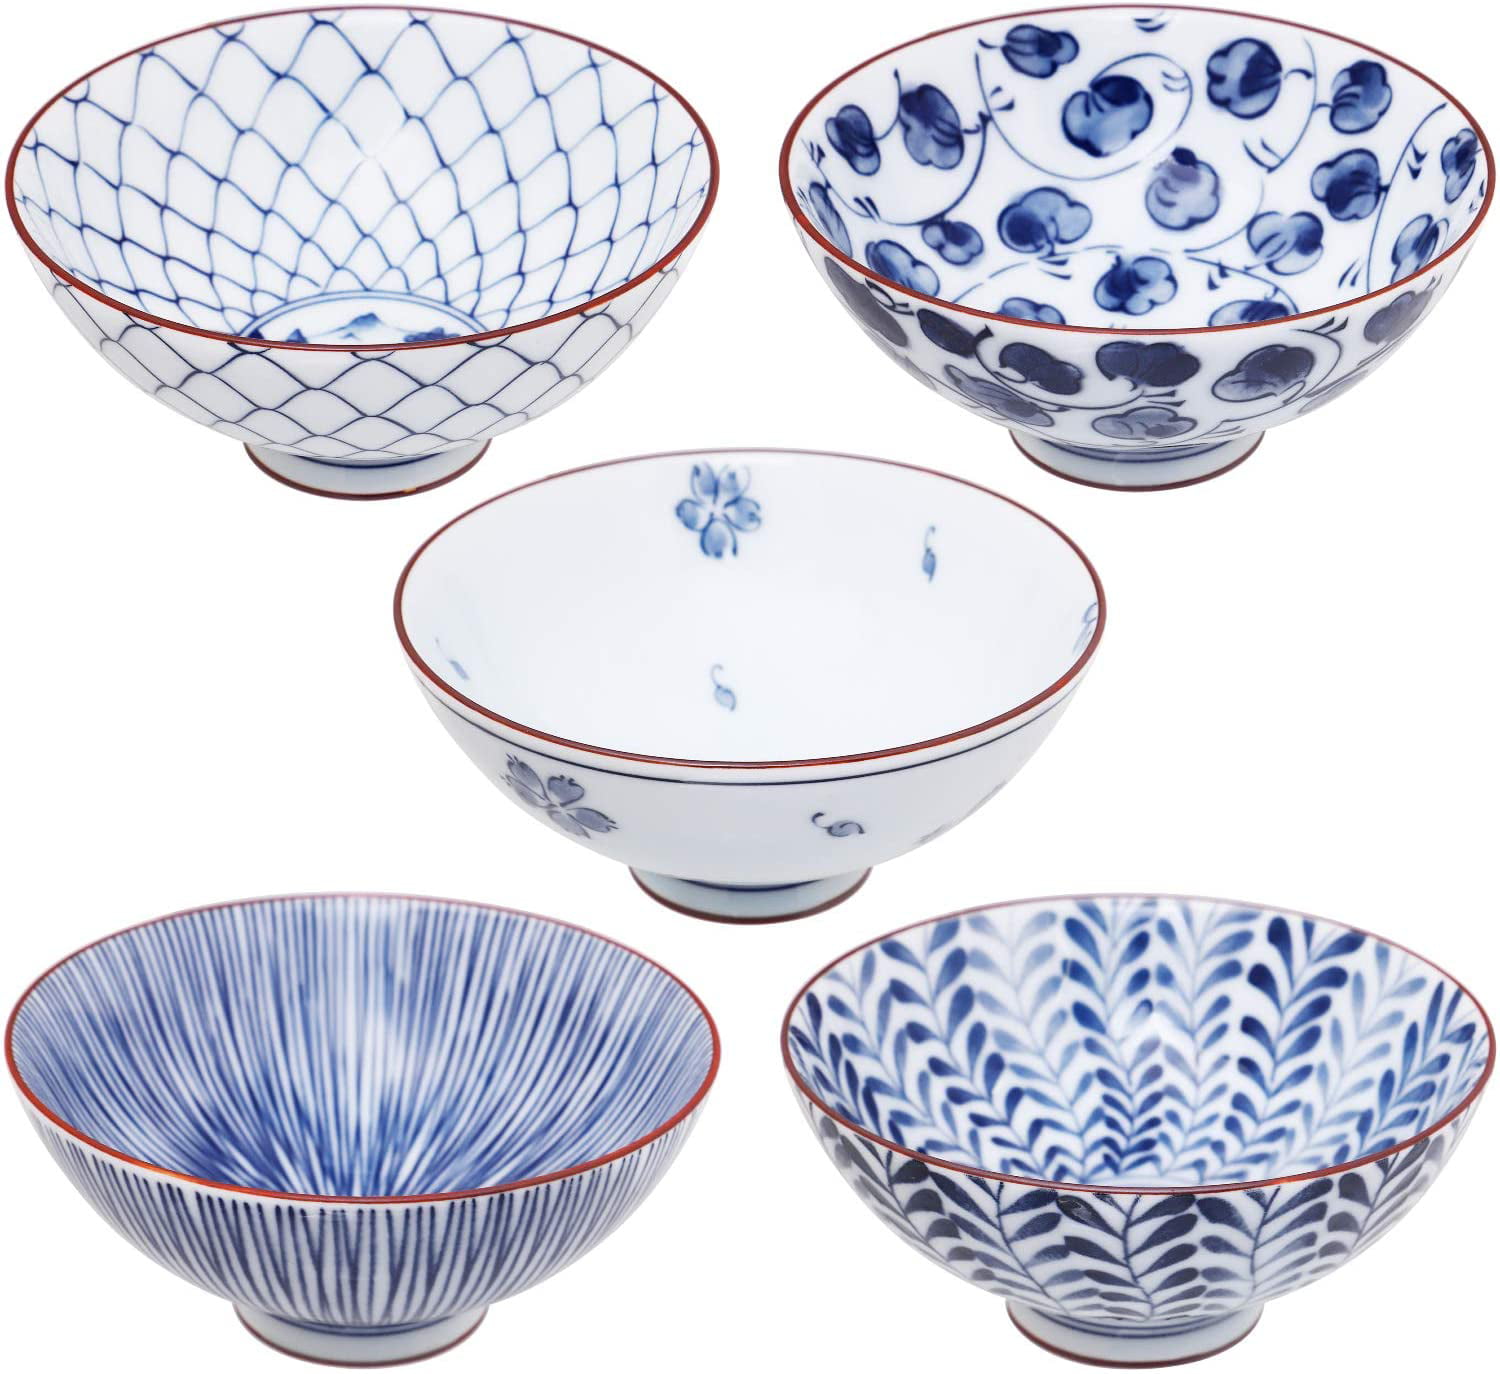 5 Small Bowls Set Saikai Pottery Japanese Ceramic Japanese Style Small Bowls Set from Japan 13033 